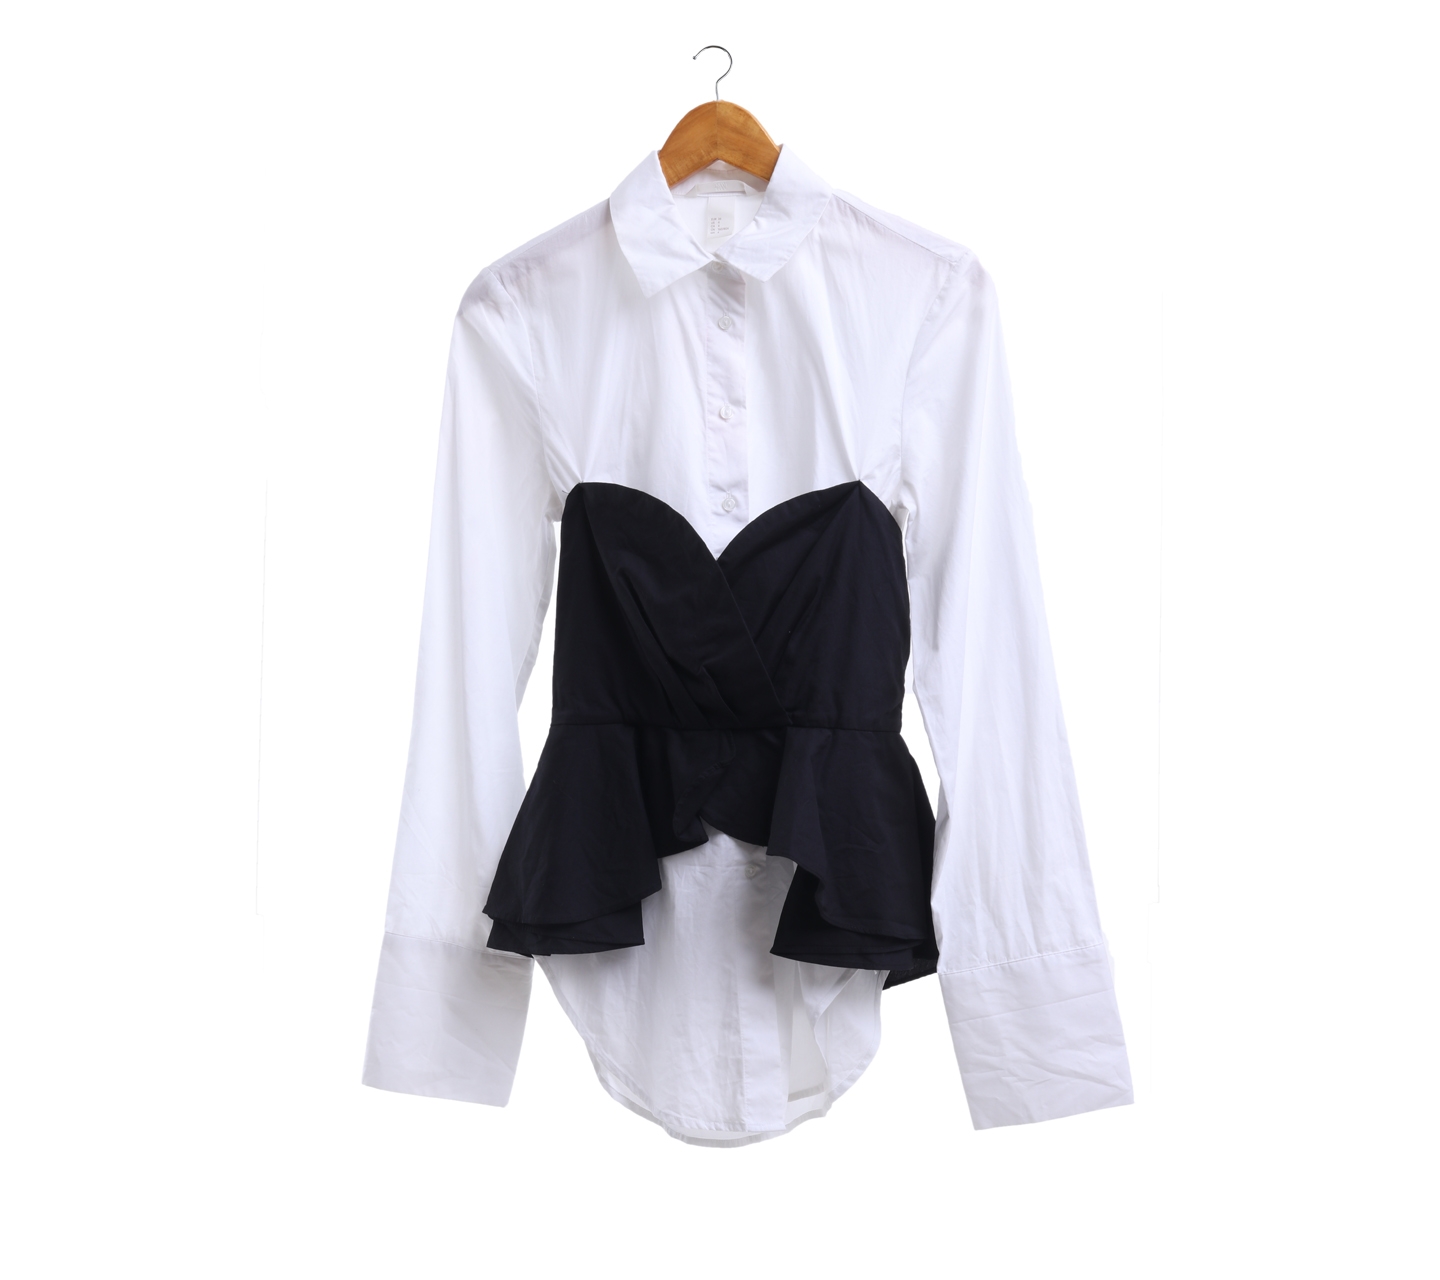 H&M Black & White Shirt